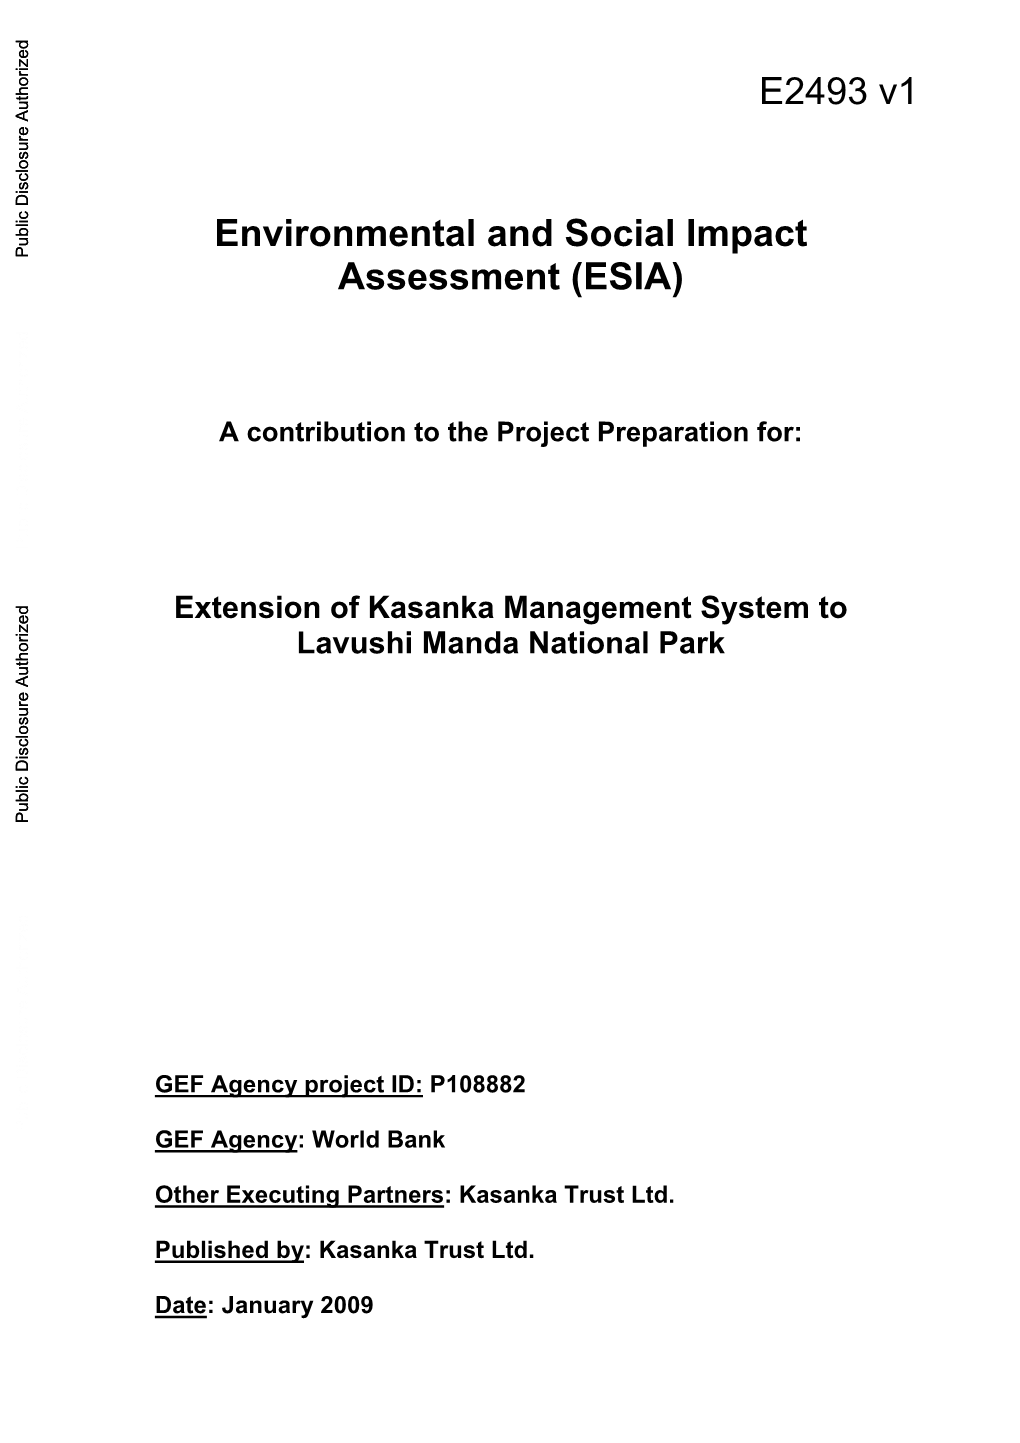 Extension of Kasanka Management System to Lavushi Manda National Park